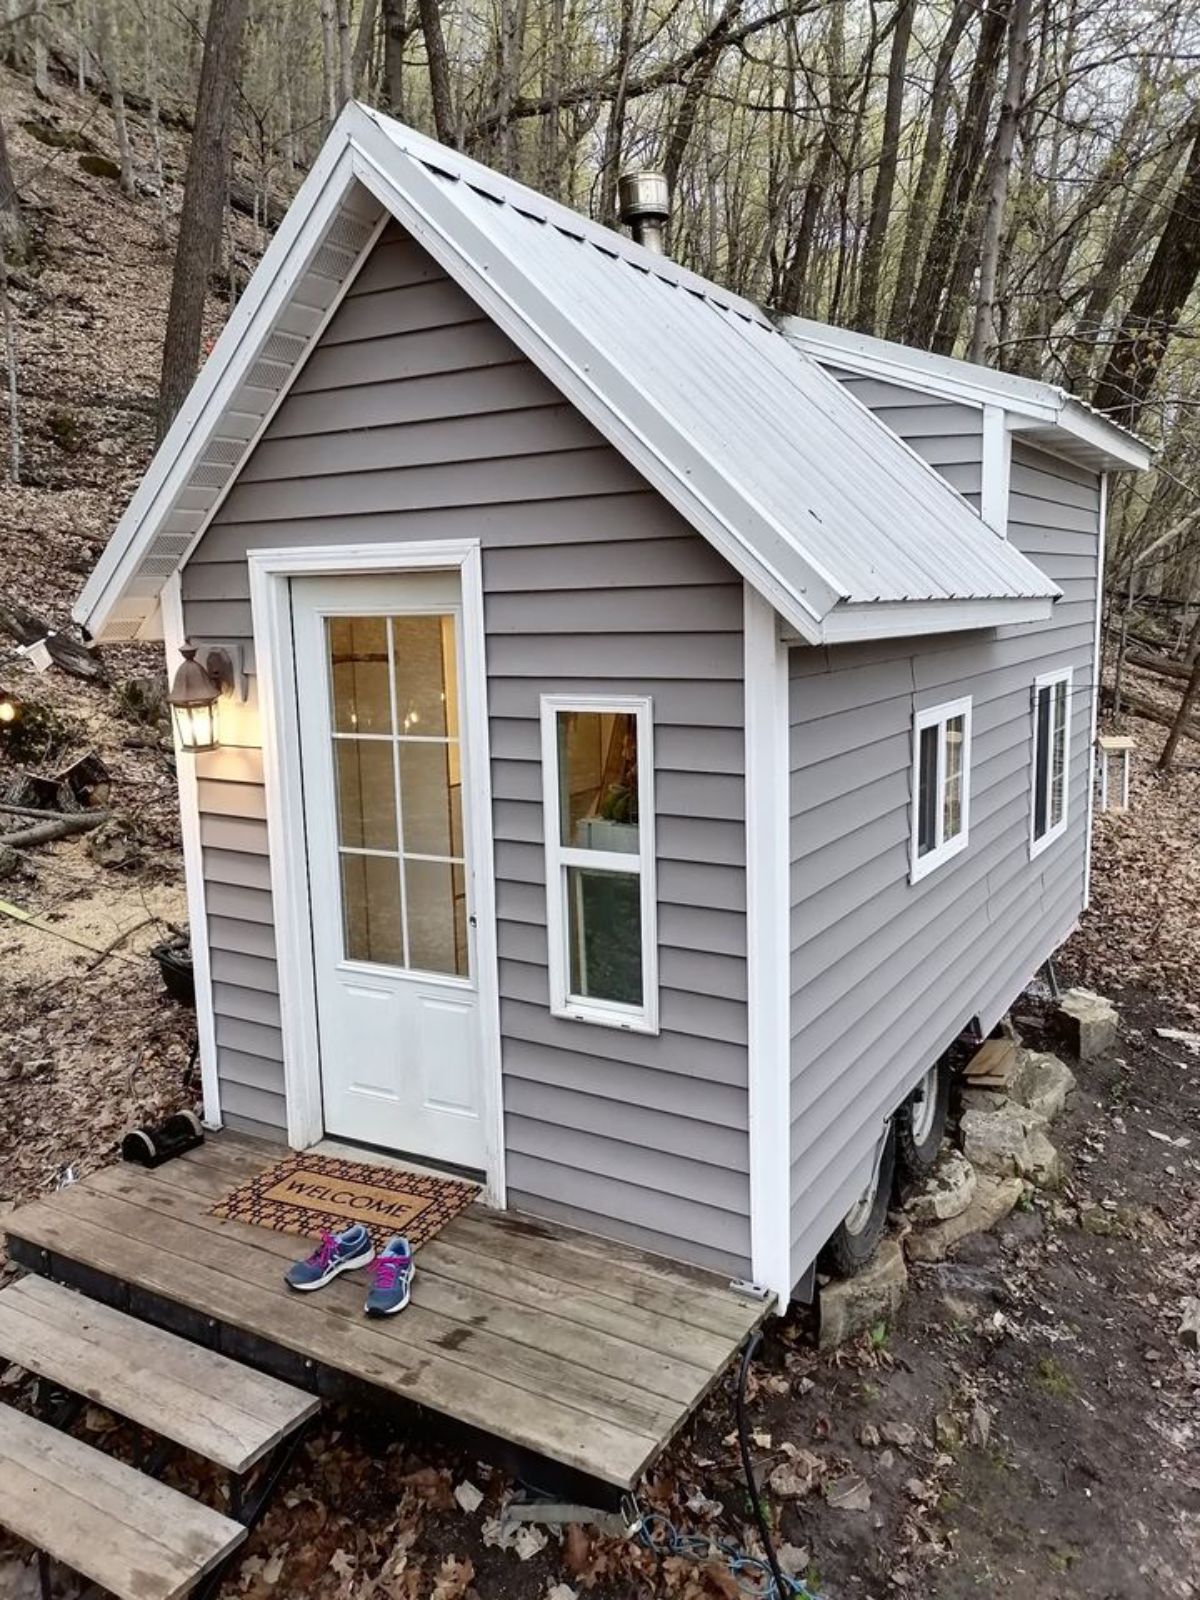 Super classy exterior of 22' Tiny Cabin